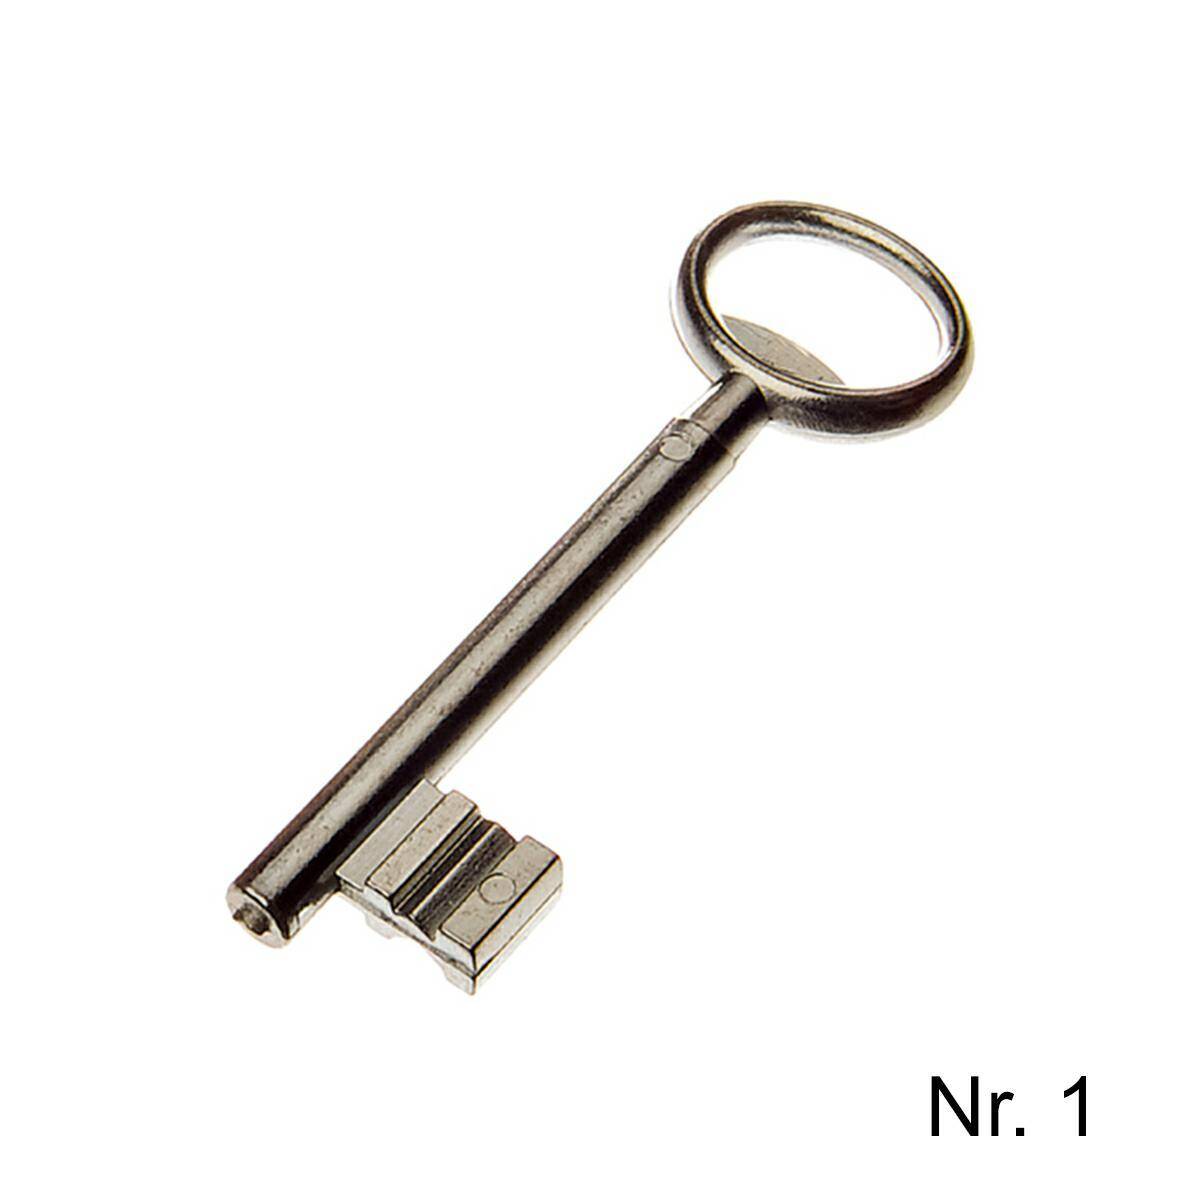 Cast key Jania for the lock - No. 1